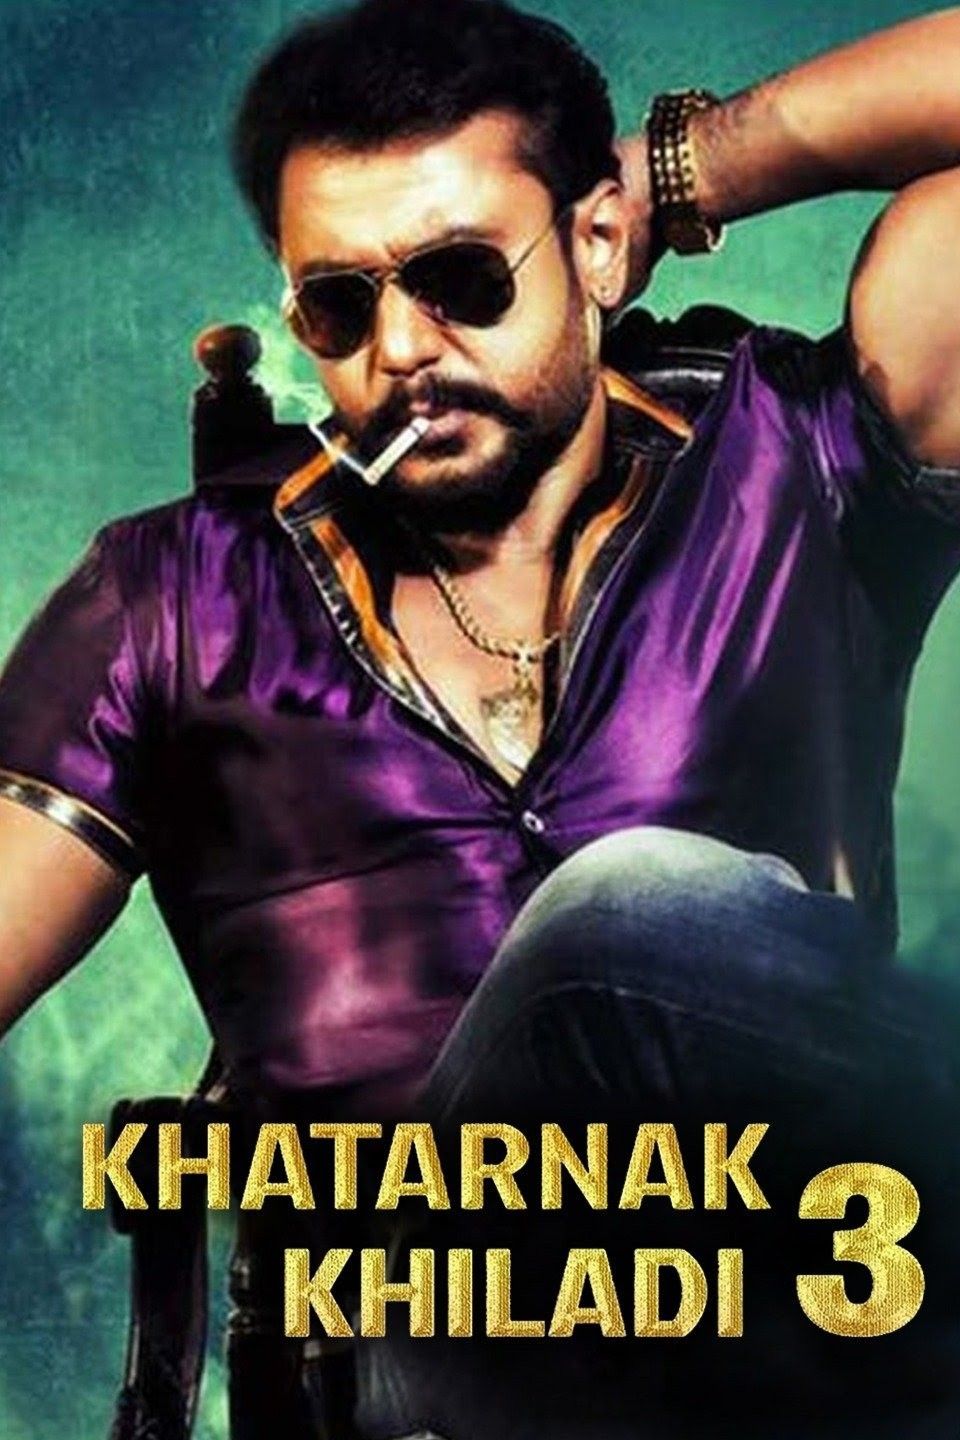 Khatarnak Khiladi 3 – Jaggu Dada (2016) Hindi Dubbed HDRip download full movie